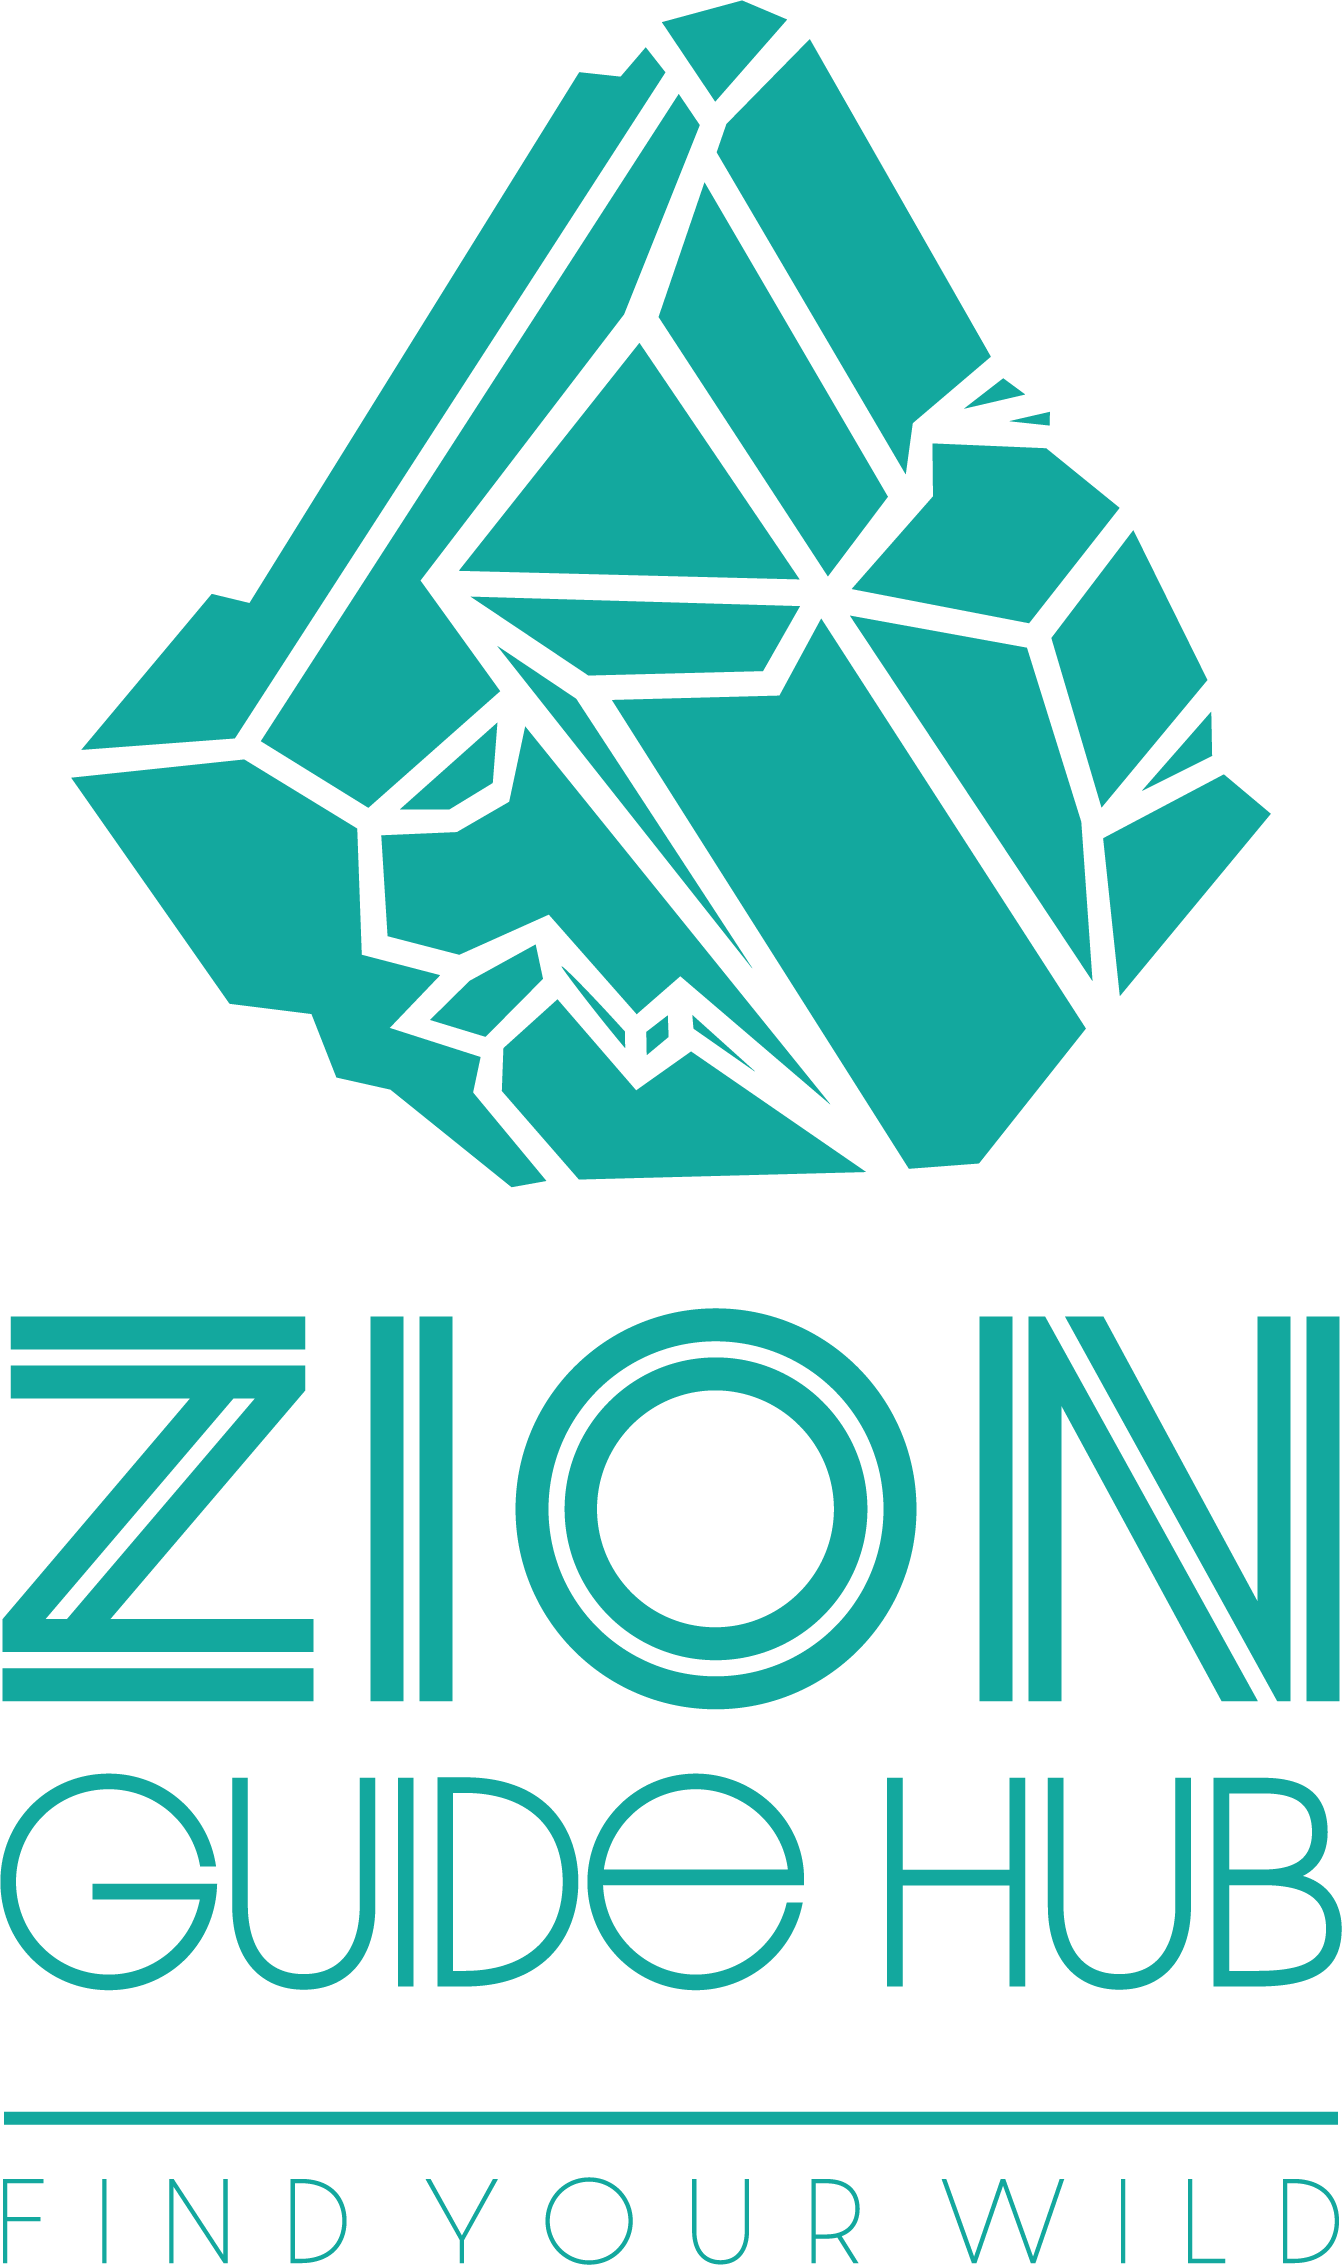 Zion Guide Hub